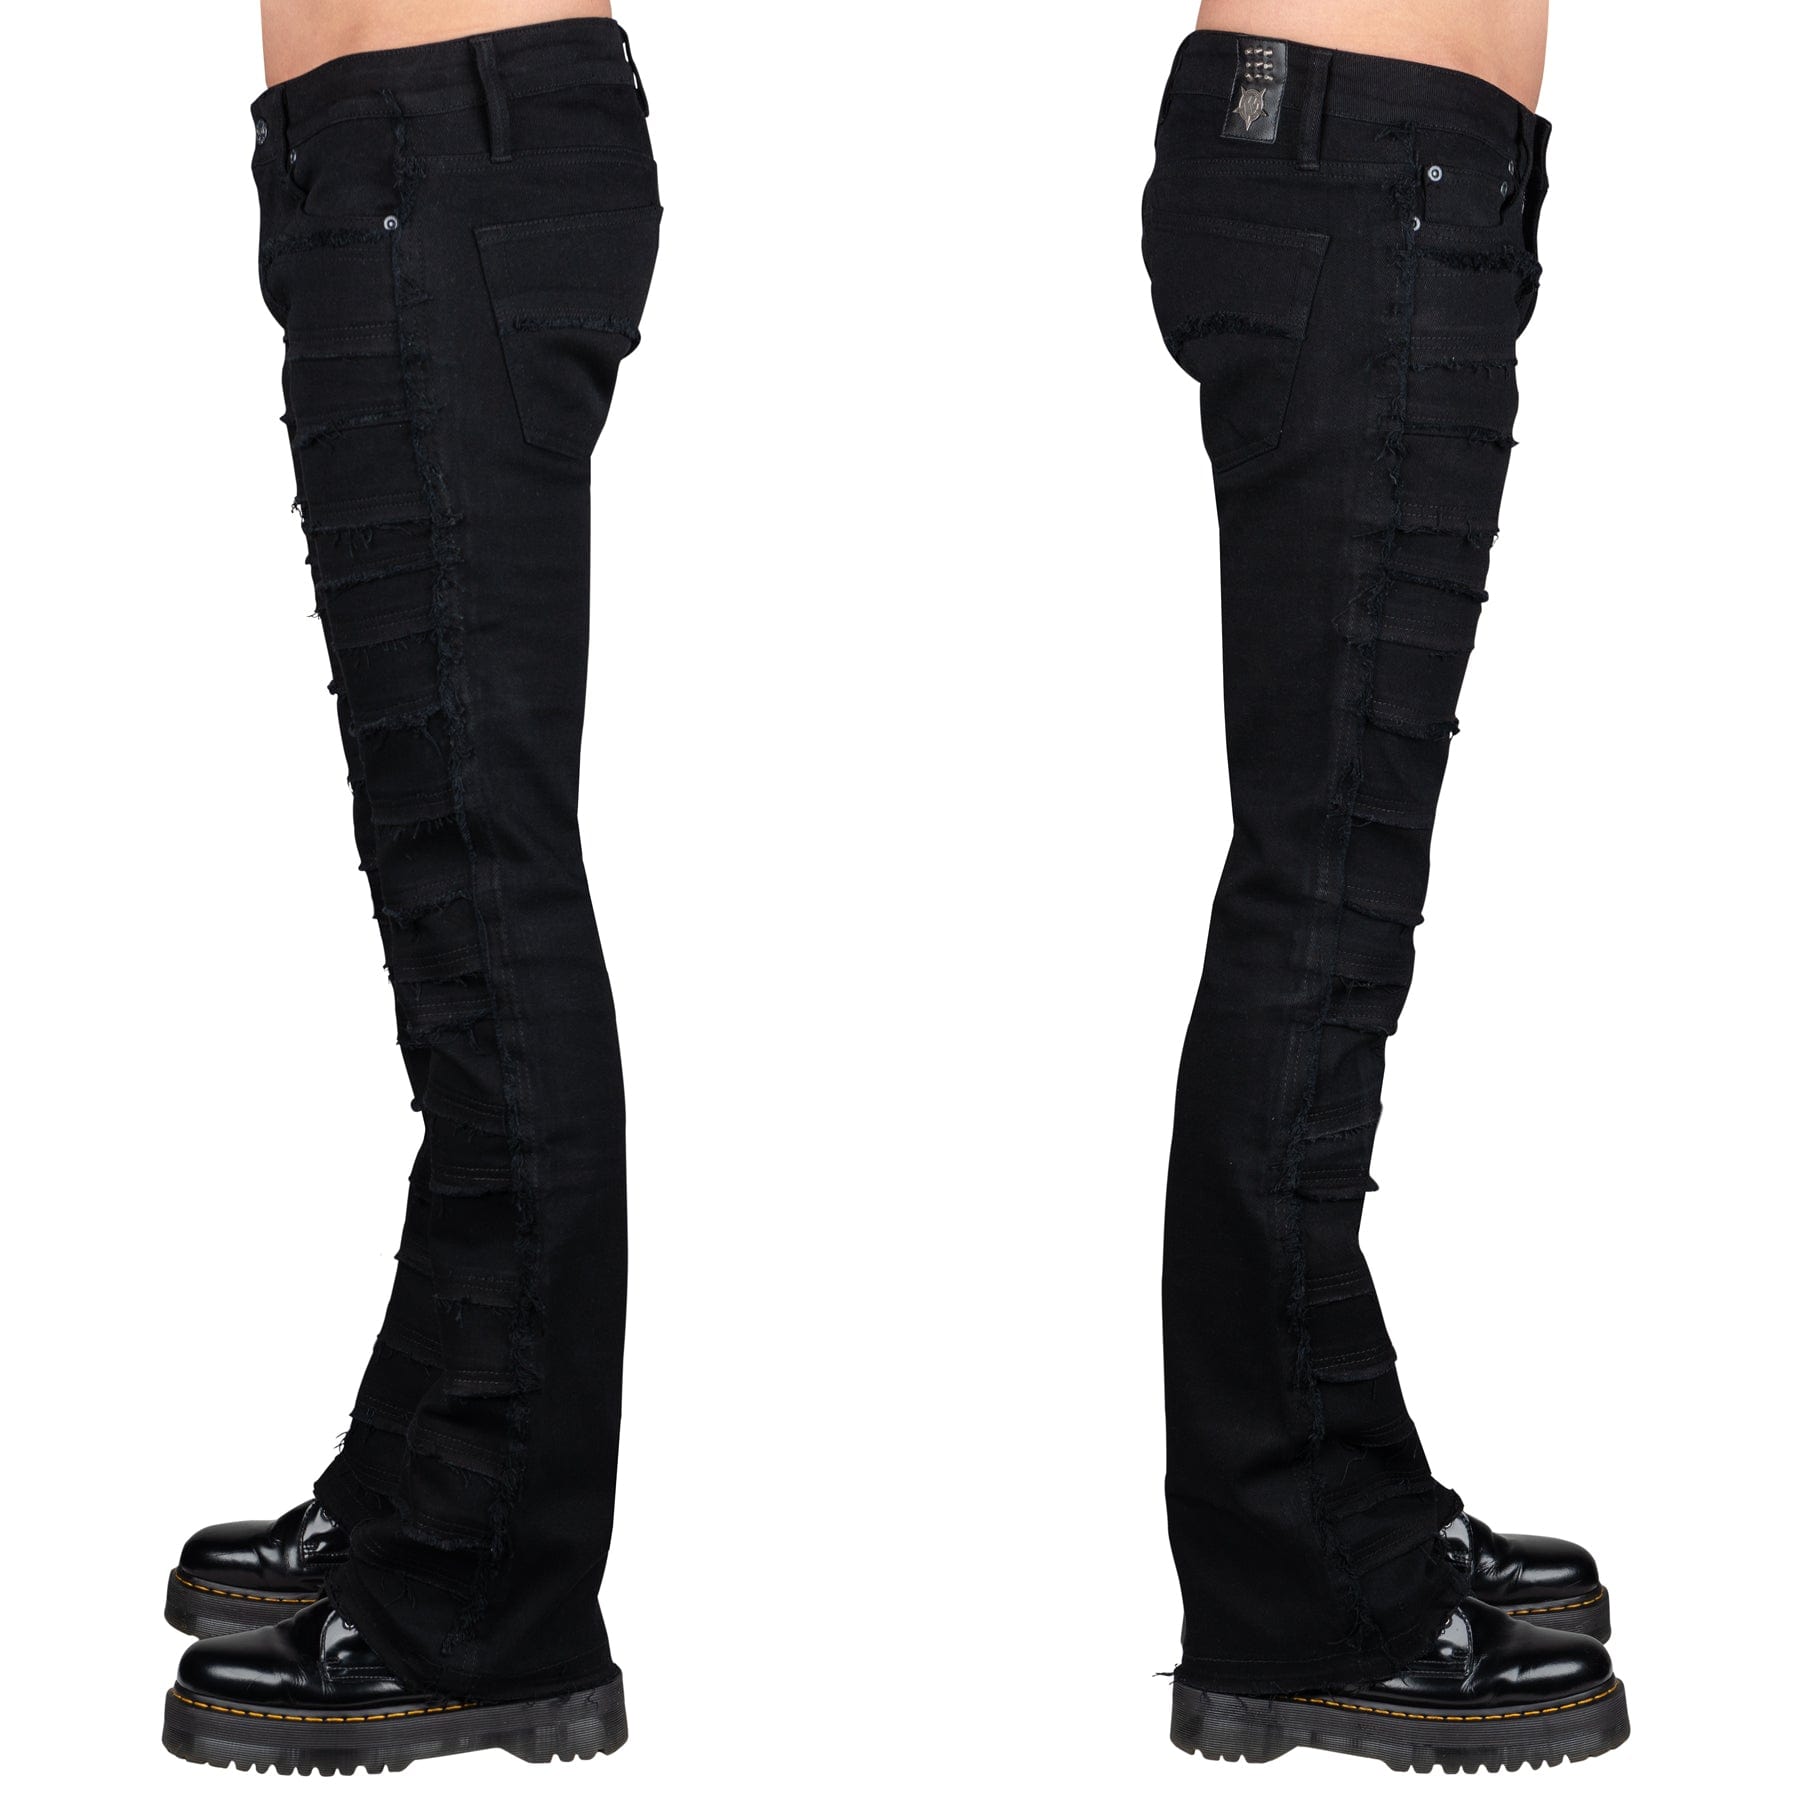 Wornstar Clothing Mens Jeans. Bandage Denim Stage Pants - Black